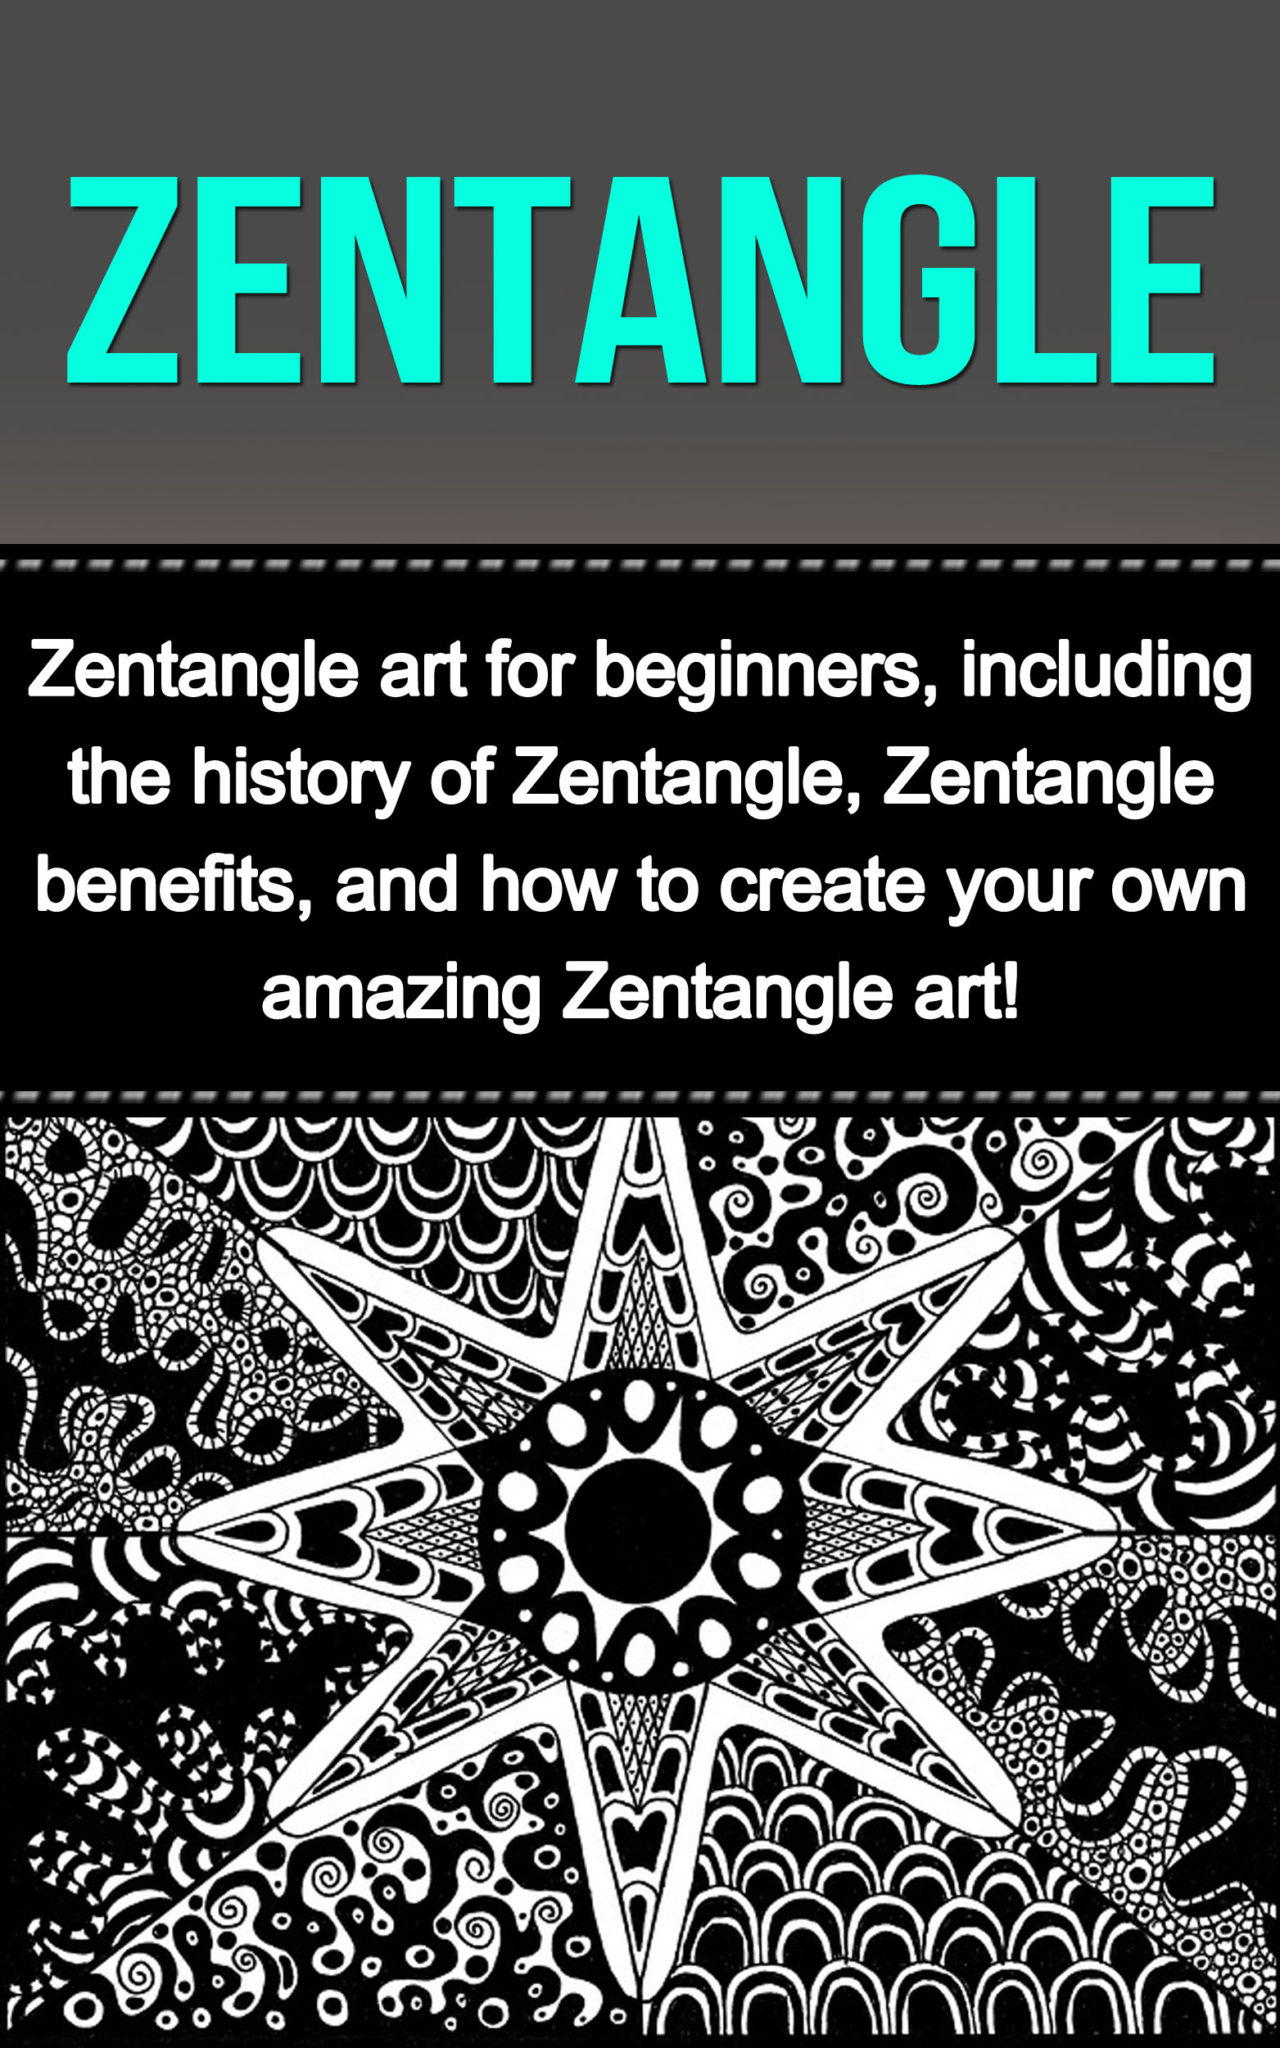 FREE: Zentangle: Zentangle art for beginners, including the history of Zentangle, Zentangle benefits, and how to create your own amazing Zentangle art! by Craig Rogan